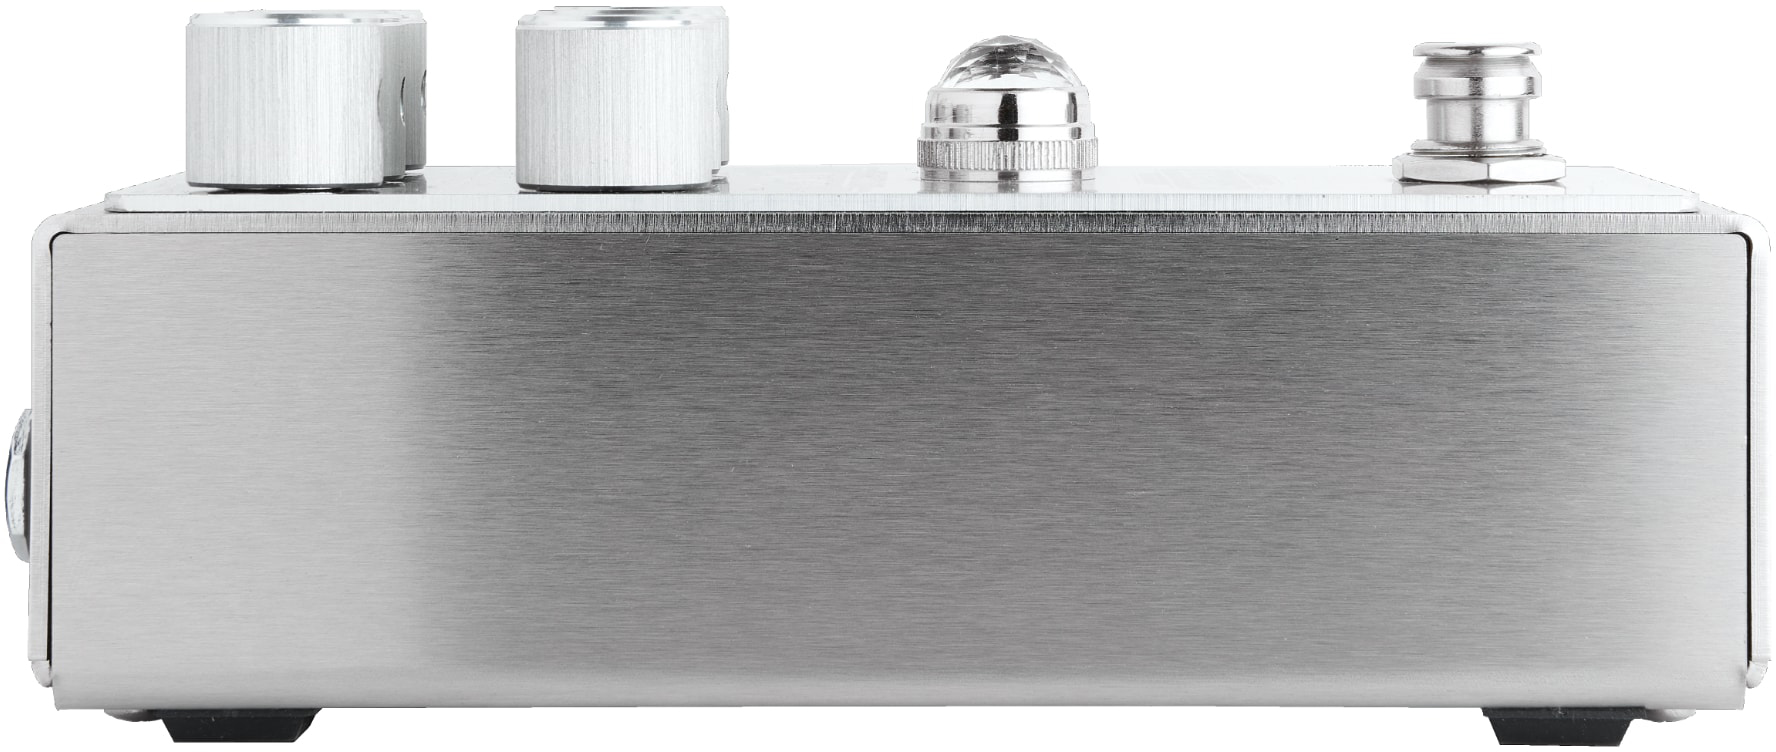 Origin Effects Sliderig Compact Deluxe Mk2 Laser Engraved Ltd - Compressor/sustain/noise gate effect pedaal - Variation 1